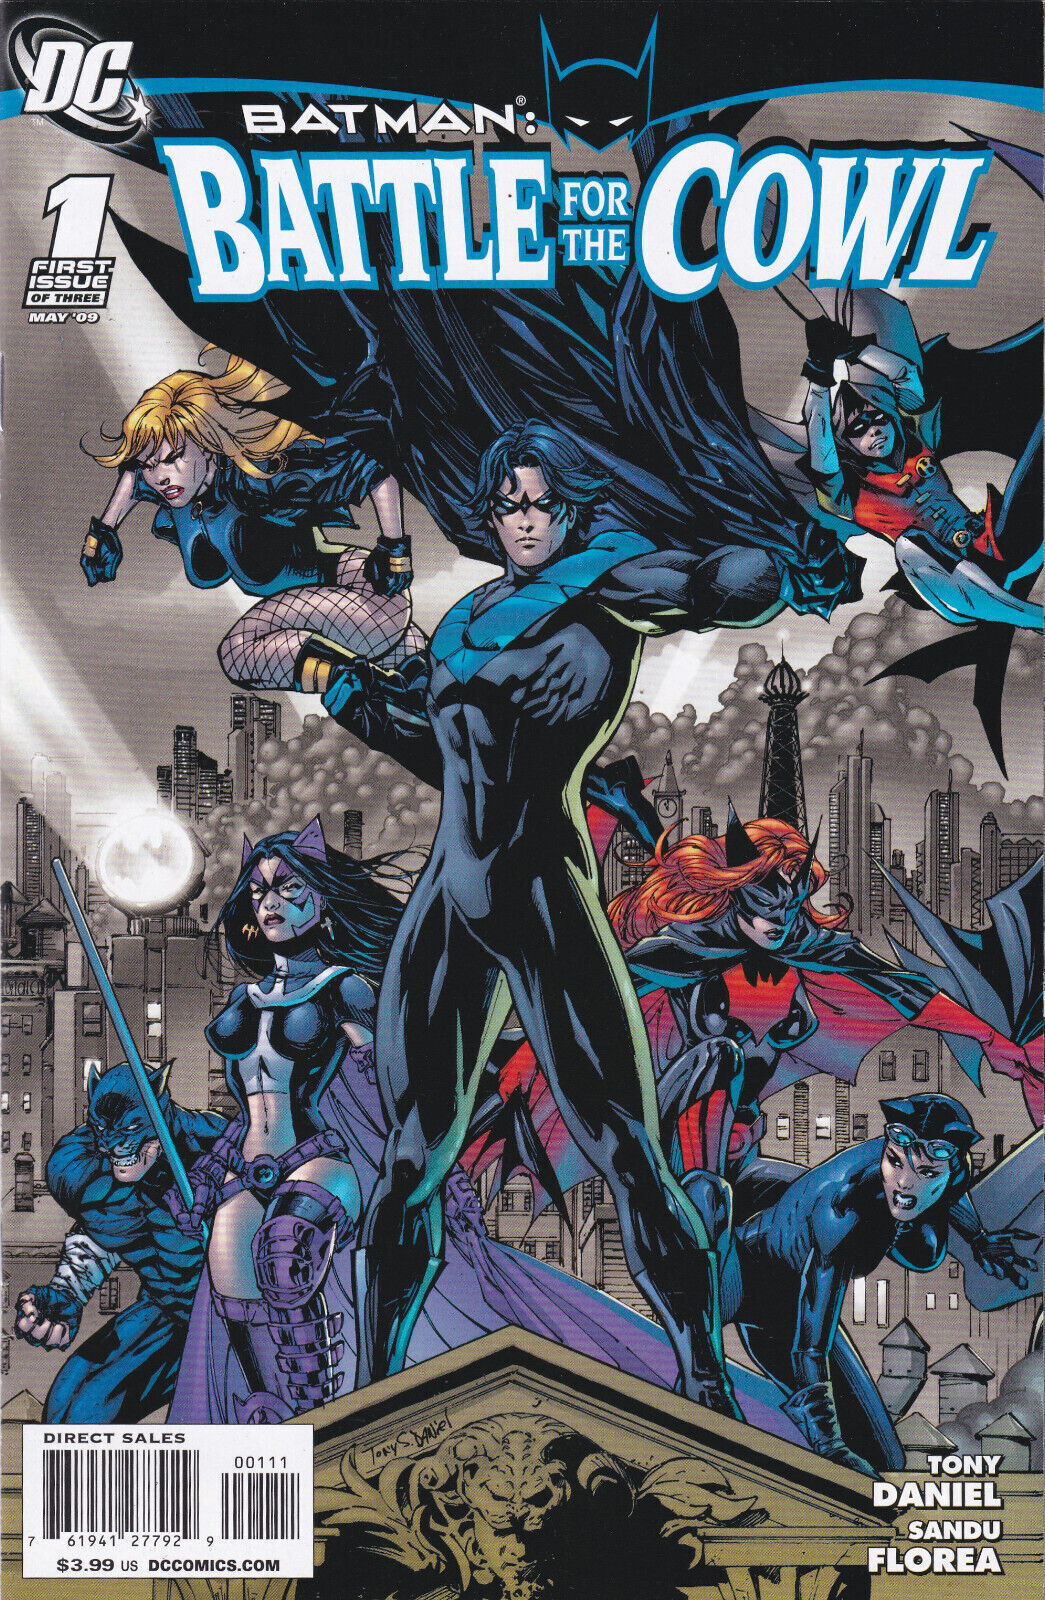 BATMAN BATTLE FOR THE COWL #1 (DC Comics 2009) -- High Grade